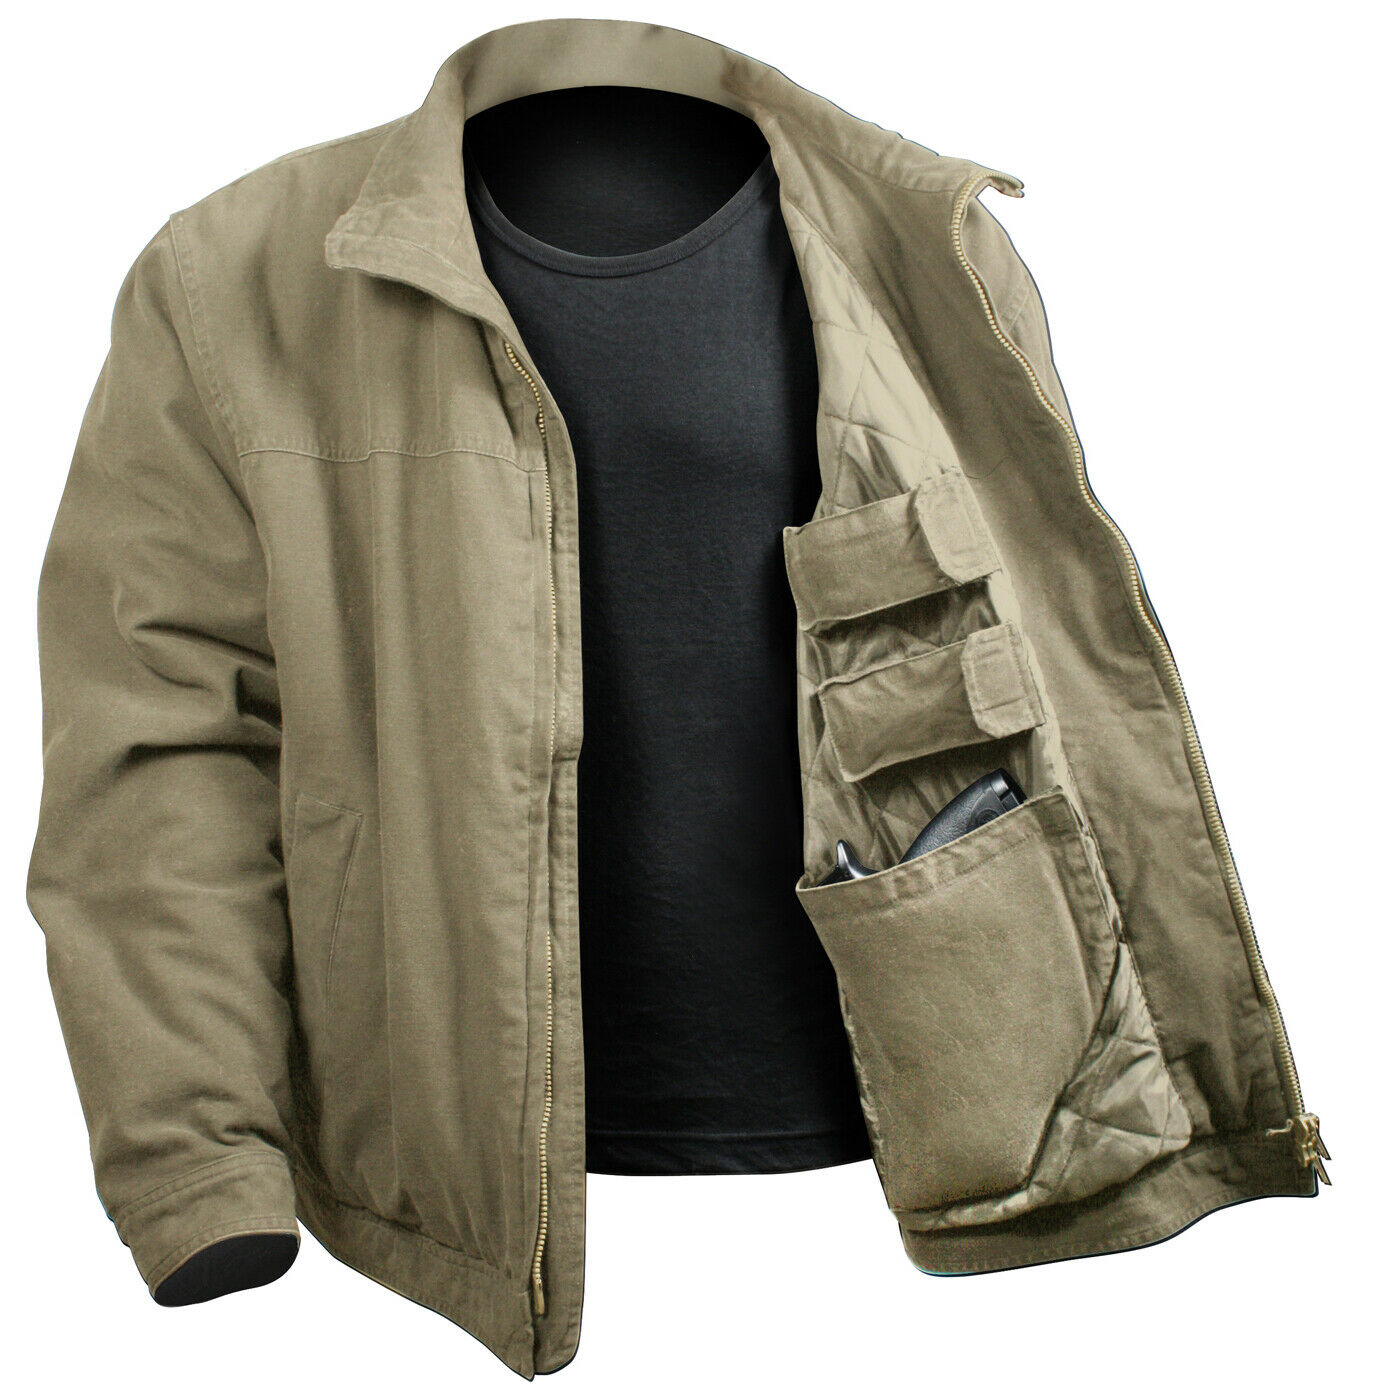 Rothco Concealed Carry 3 Season Jacket - Khaki